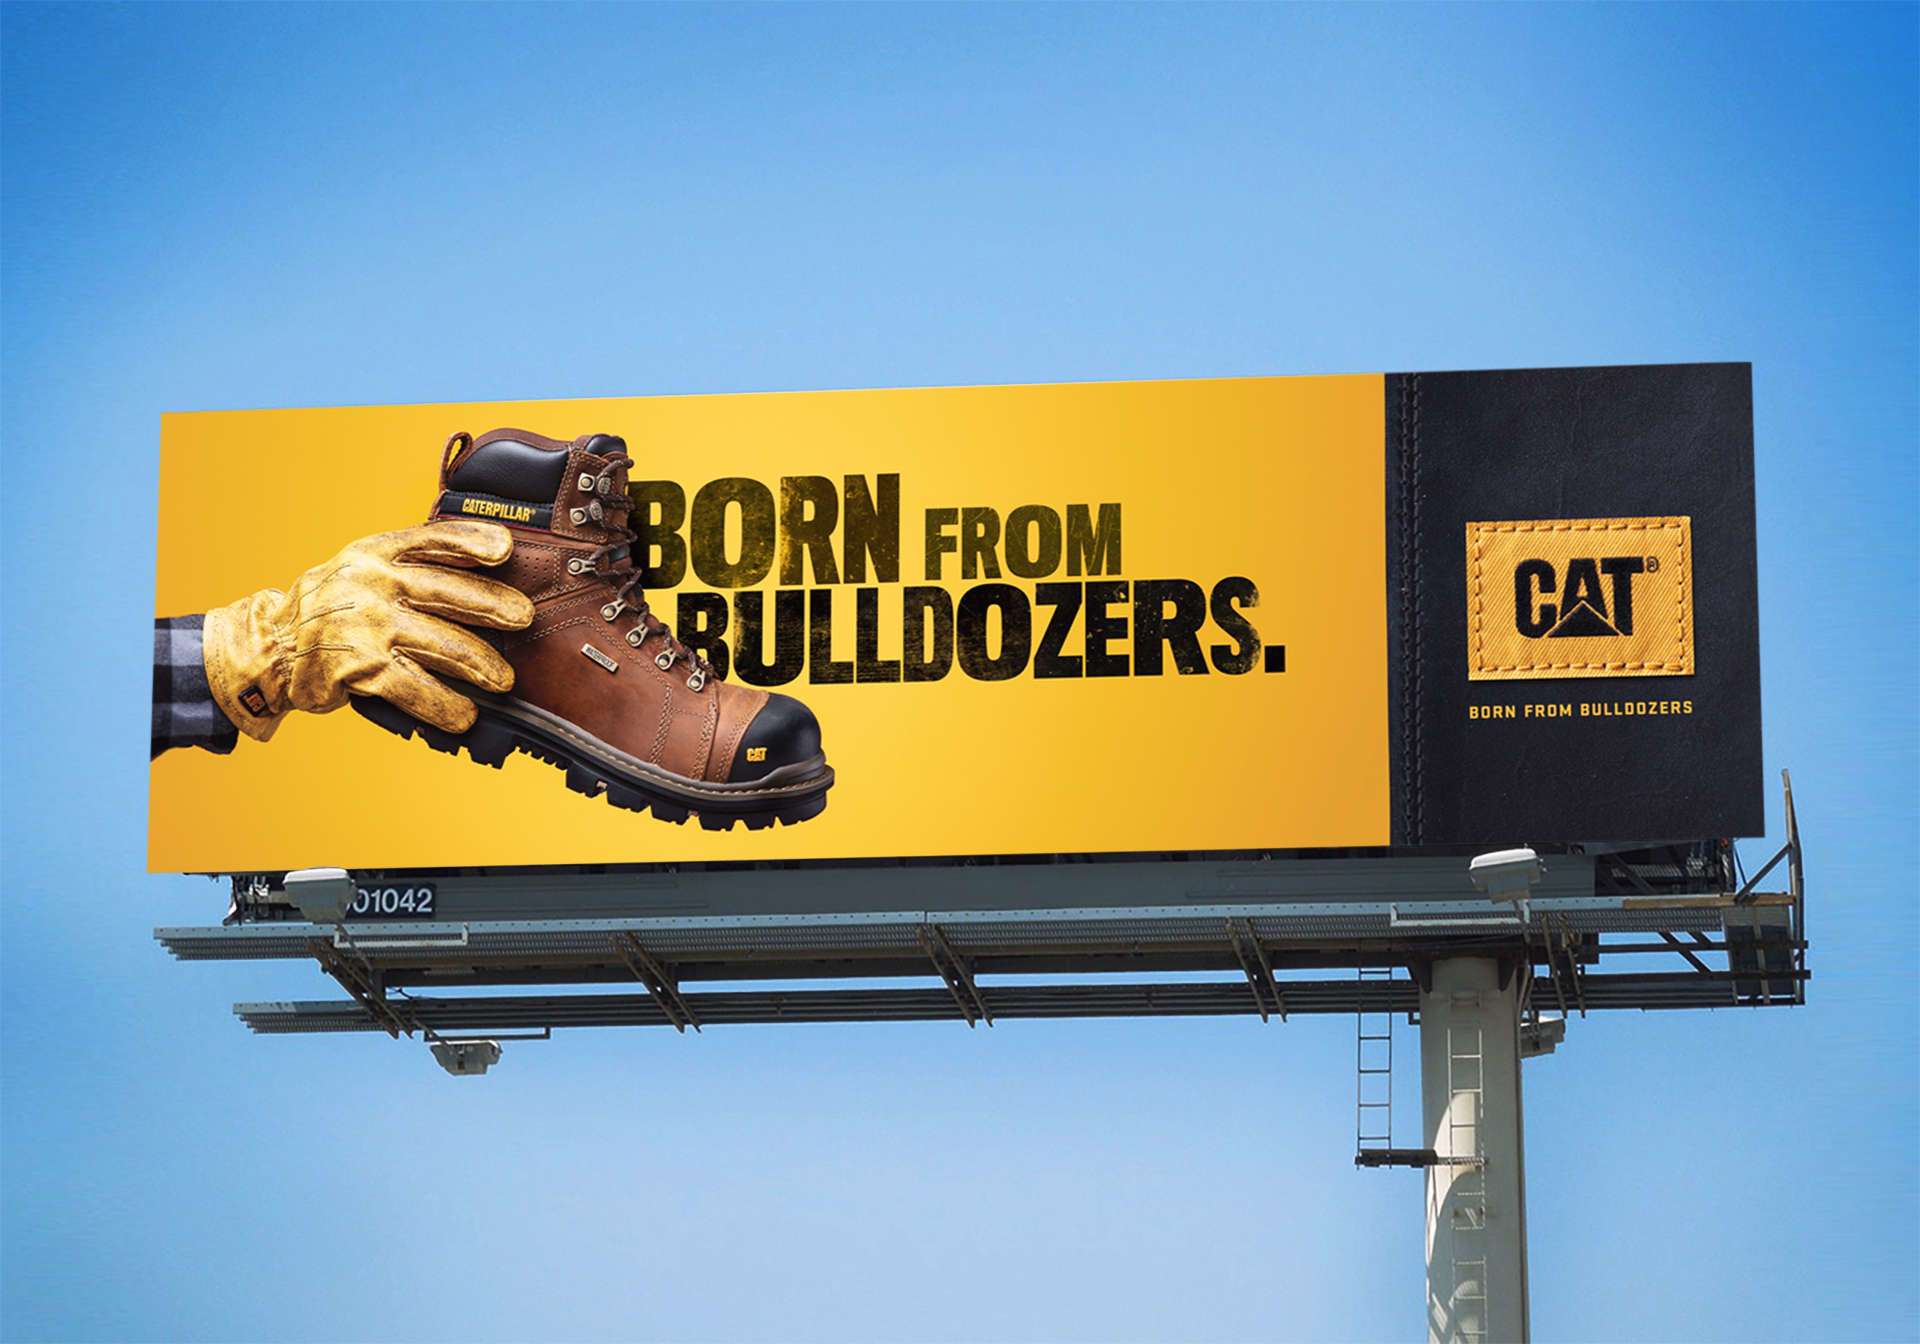 cat-born-from-bulldozers